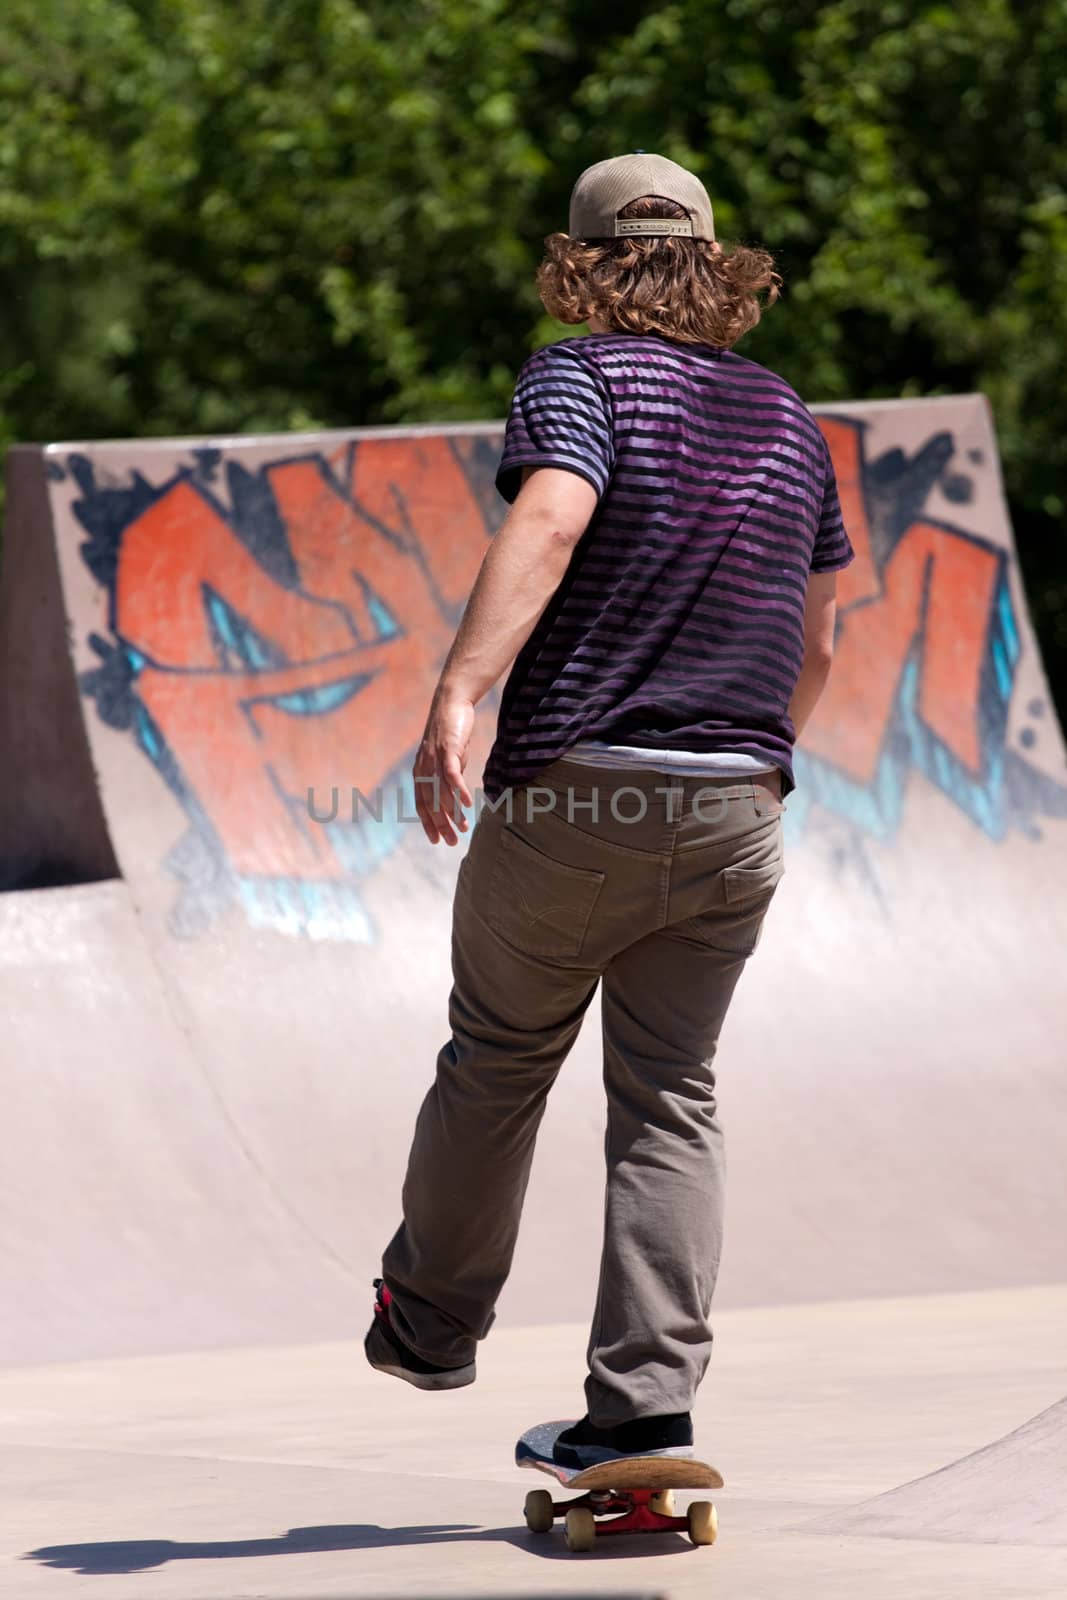 Skateboarder Skating at a Skate Park by graficallyminded